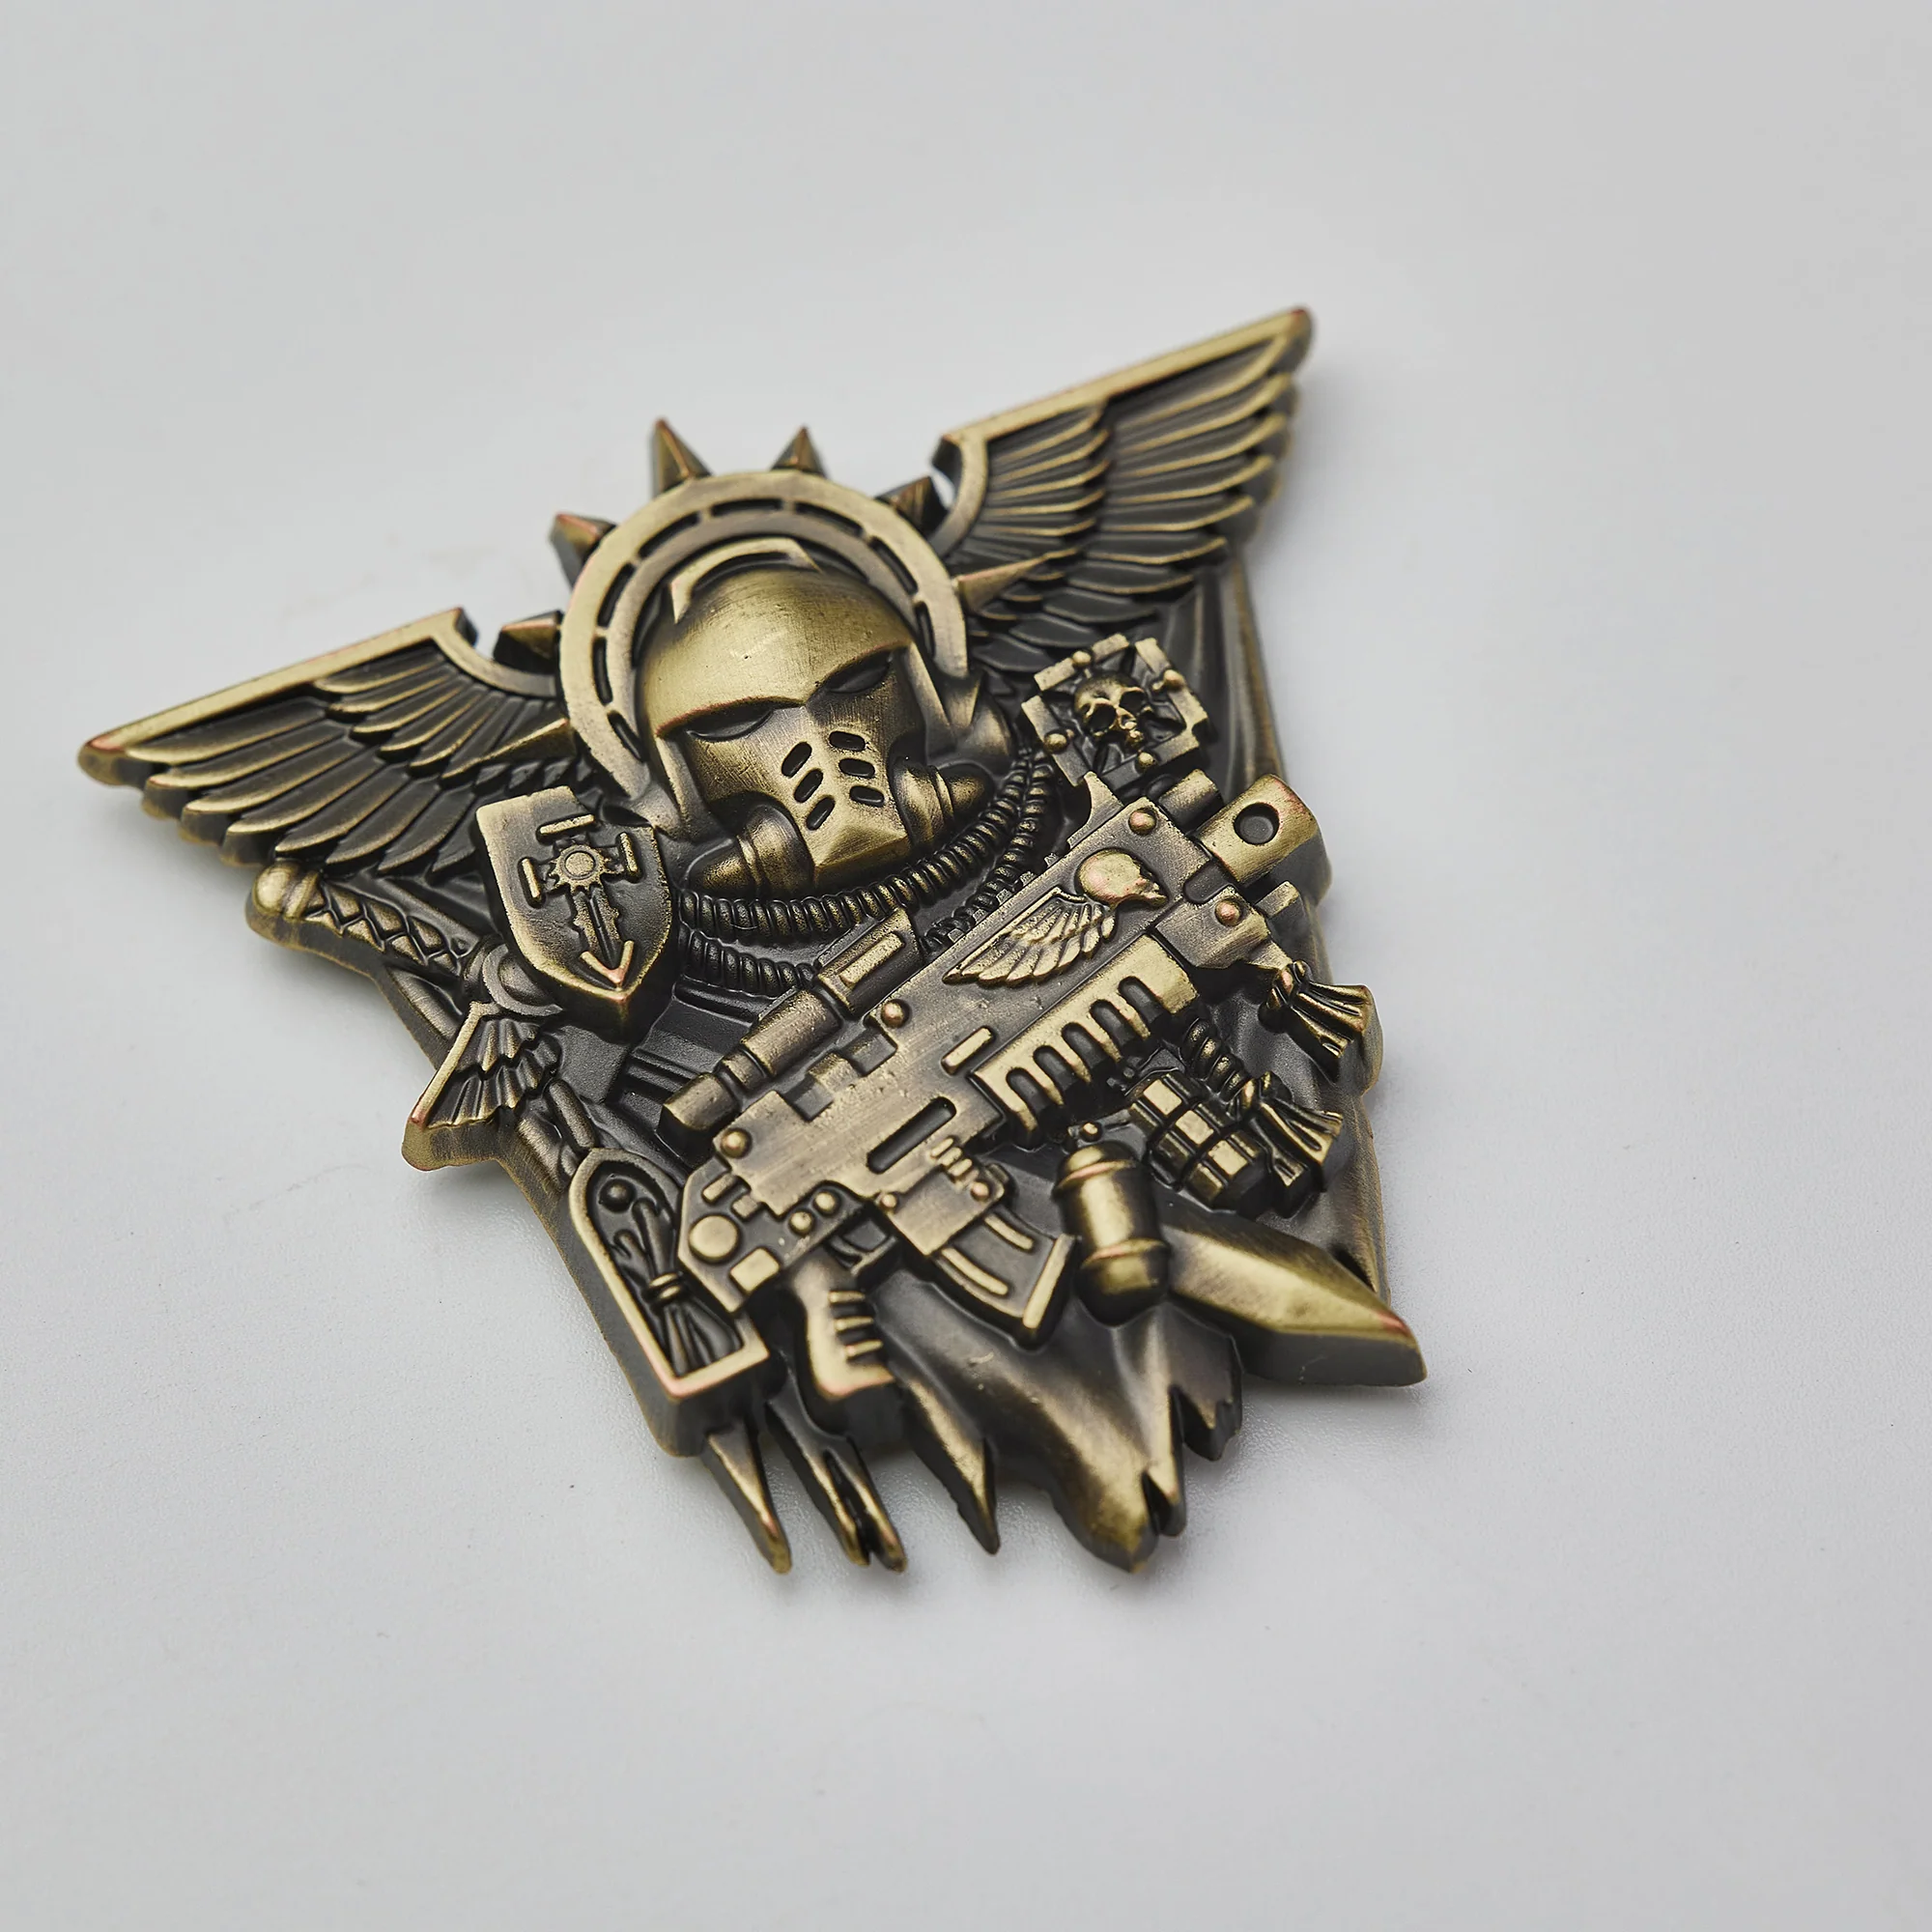 Space Marine Medallion